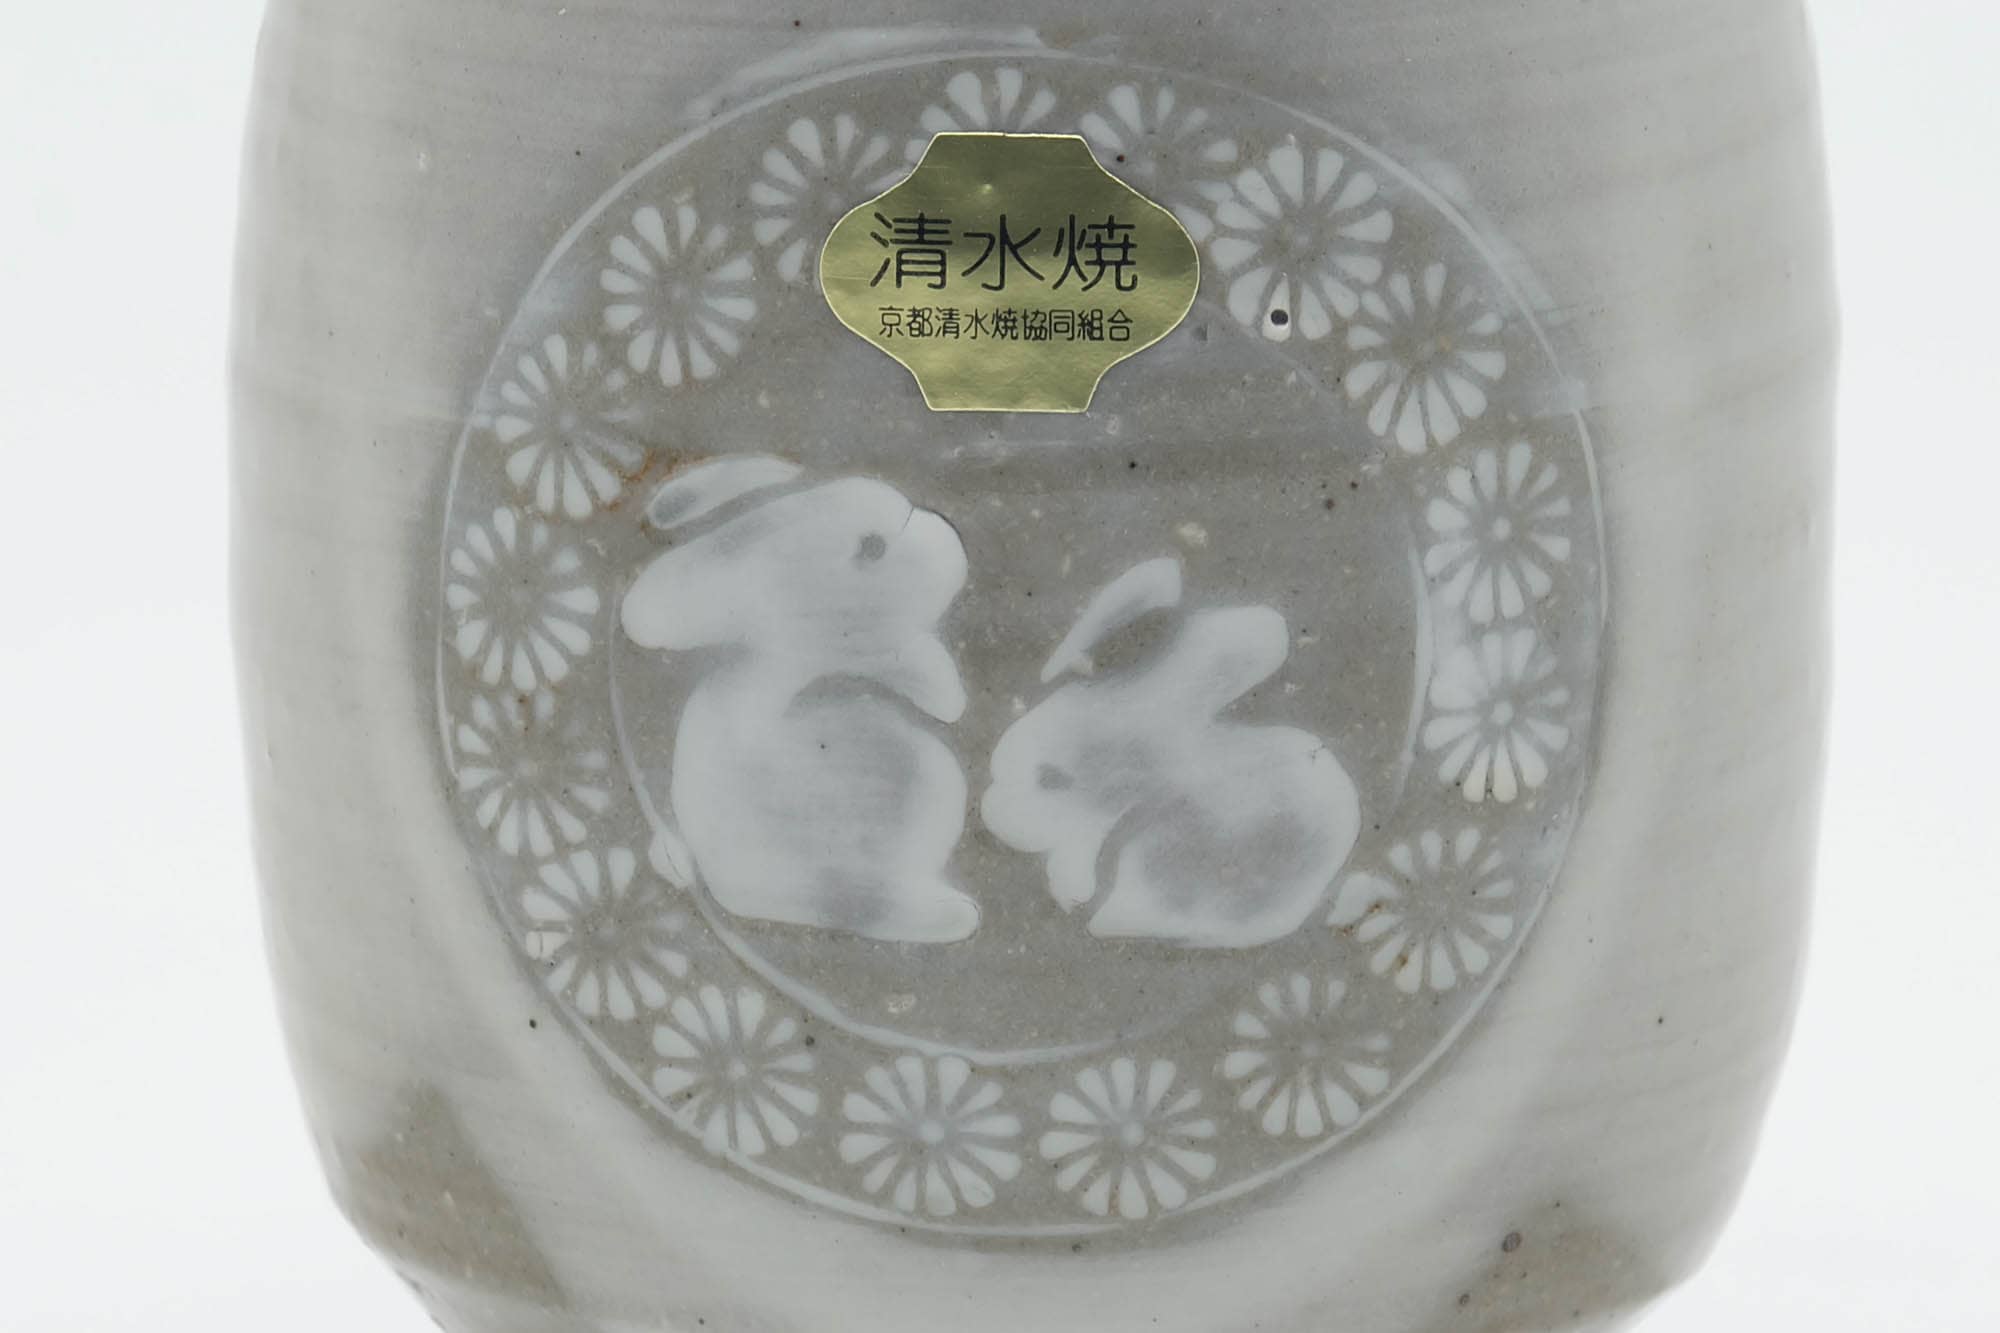 Japanese Teacup - Bunny Rabbits Kiyomizu-yaki Yunomi - 200ml